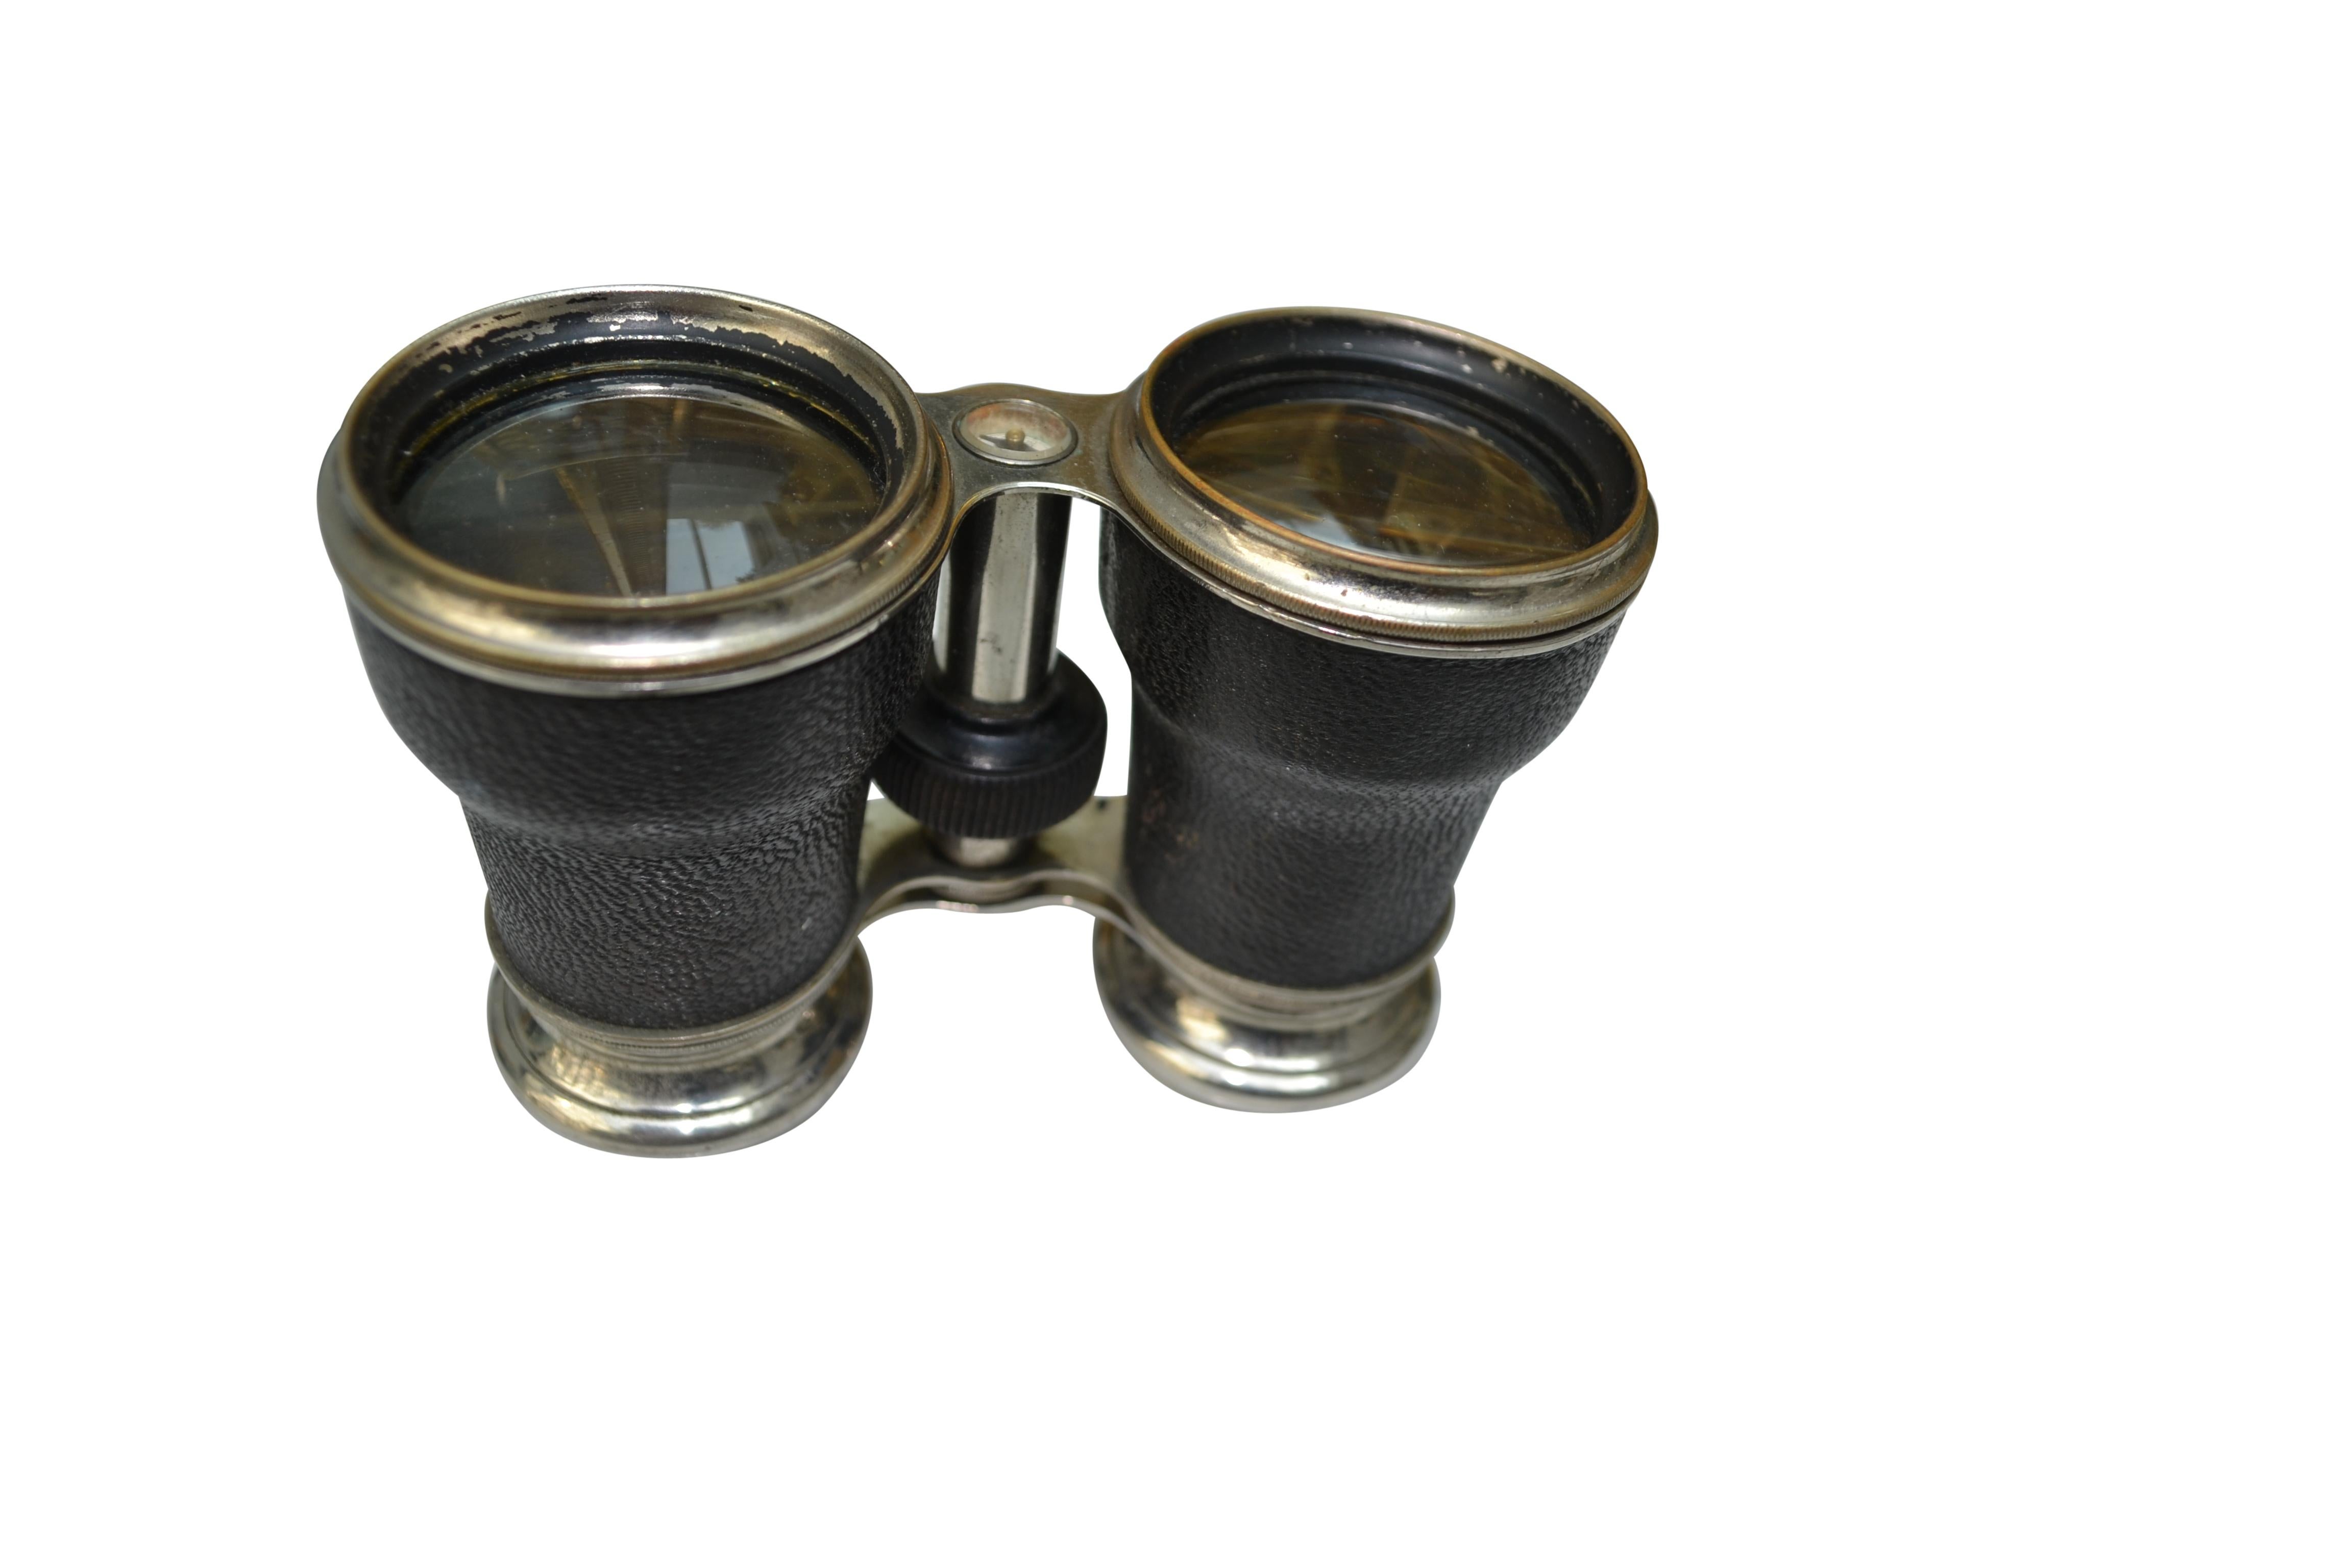 binoculars for horse racing